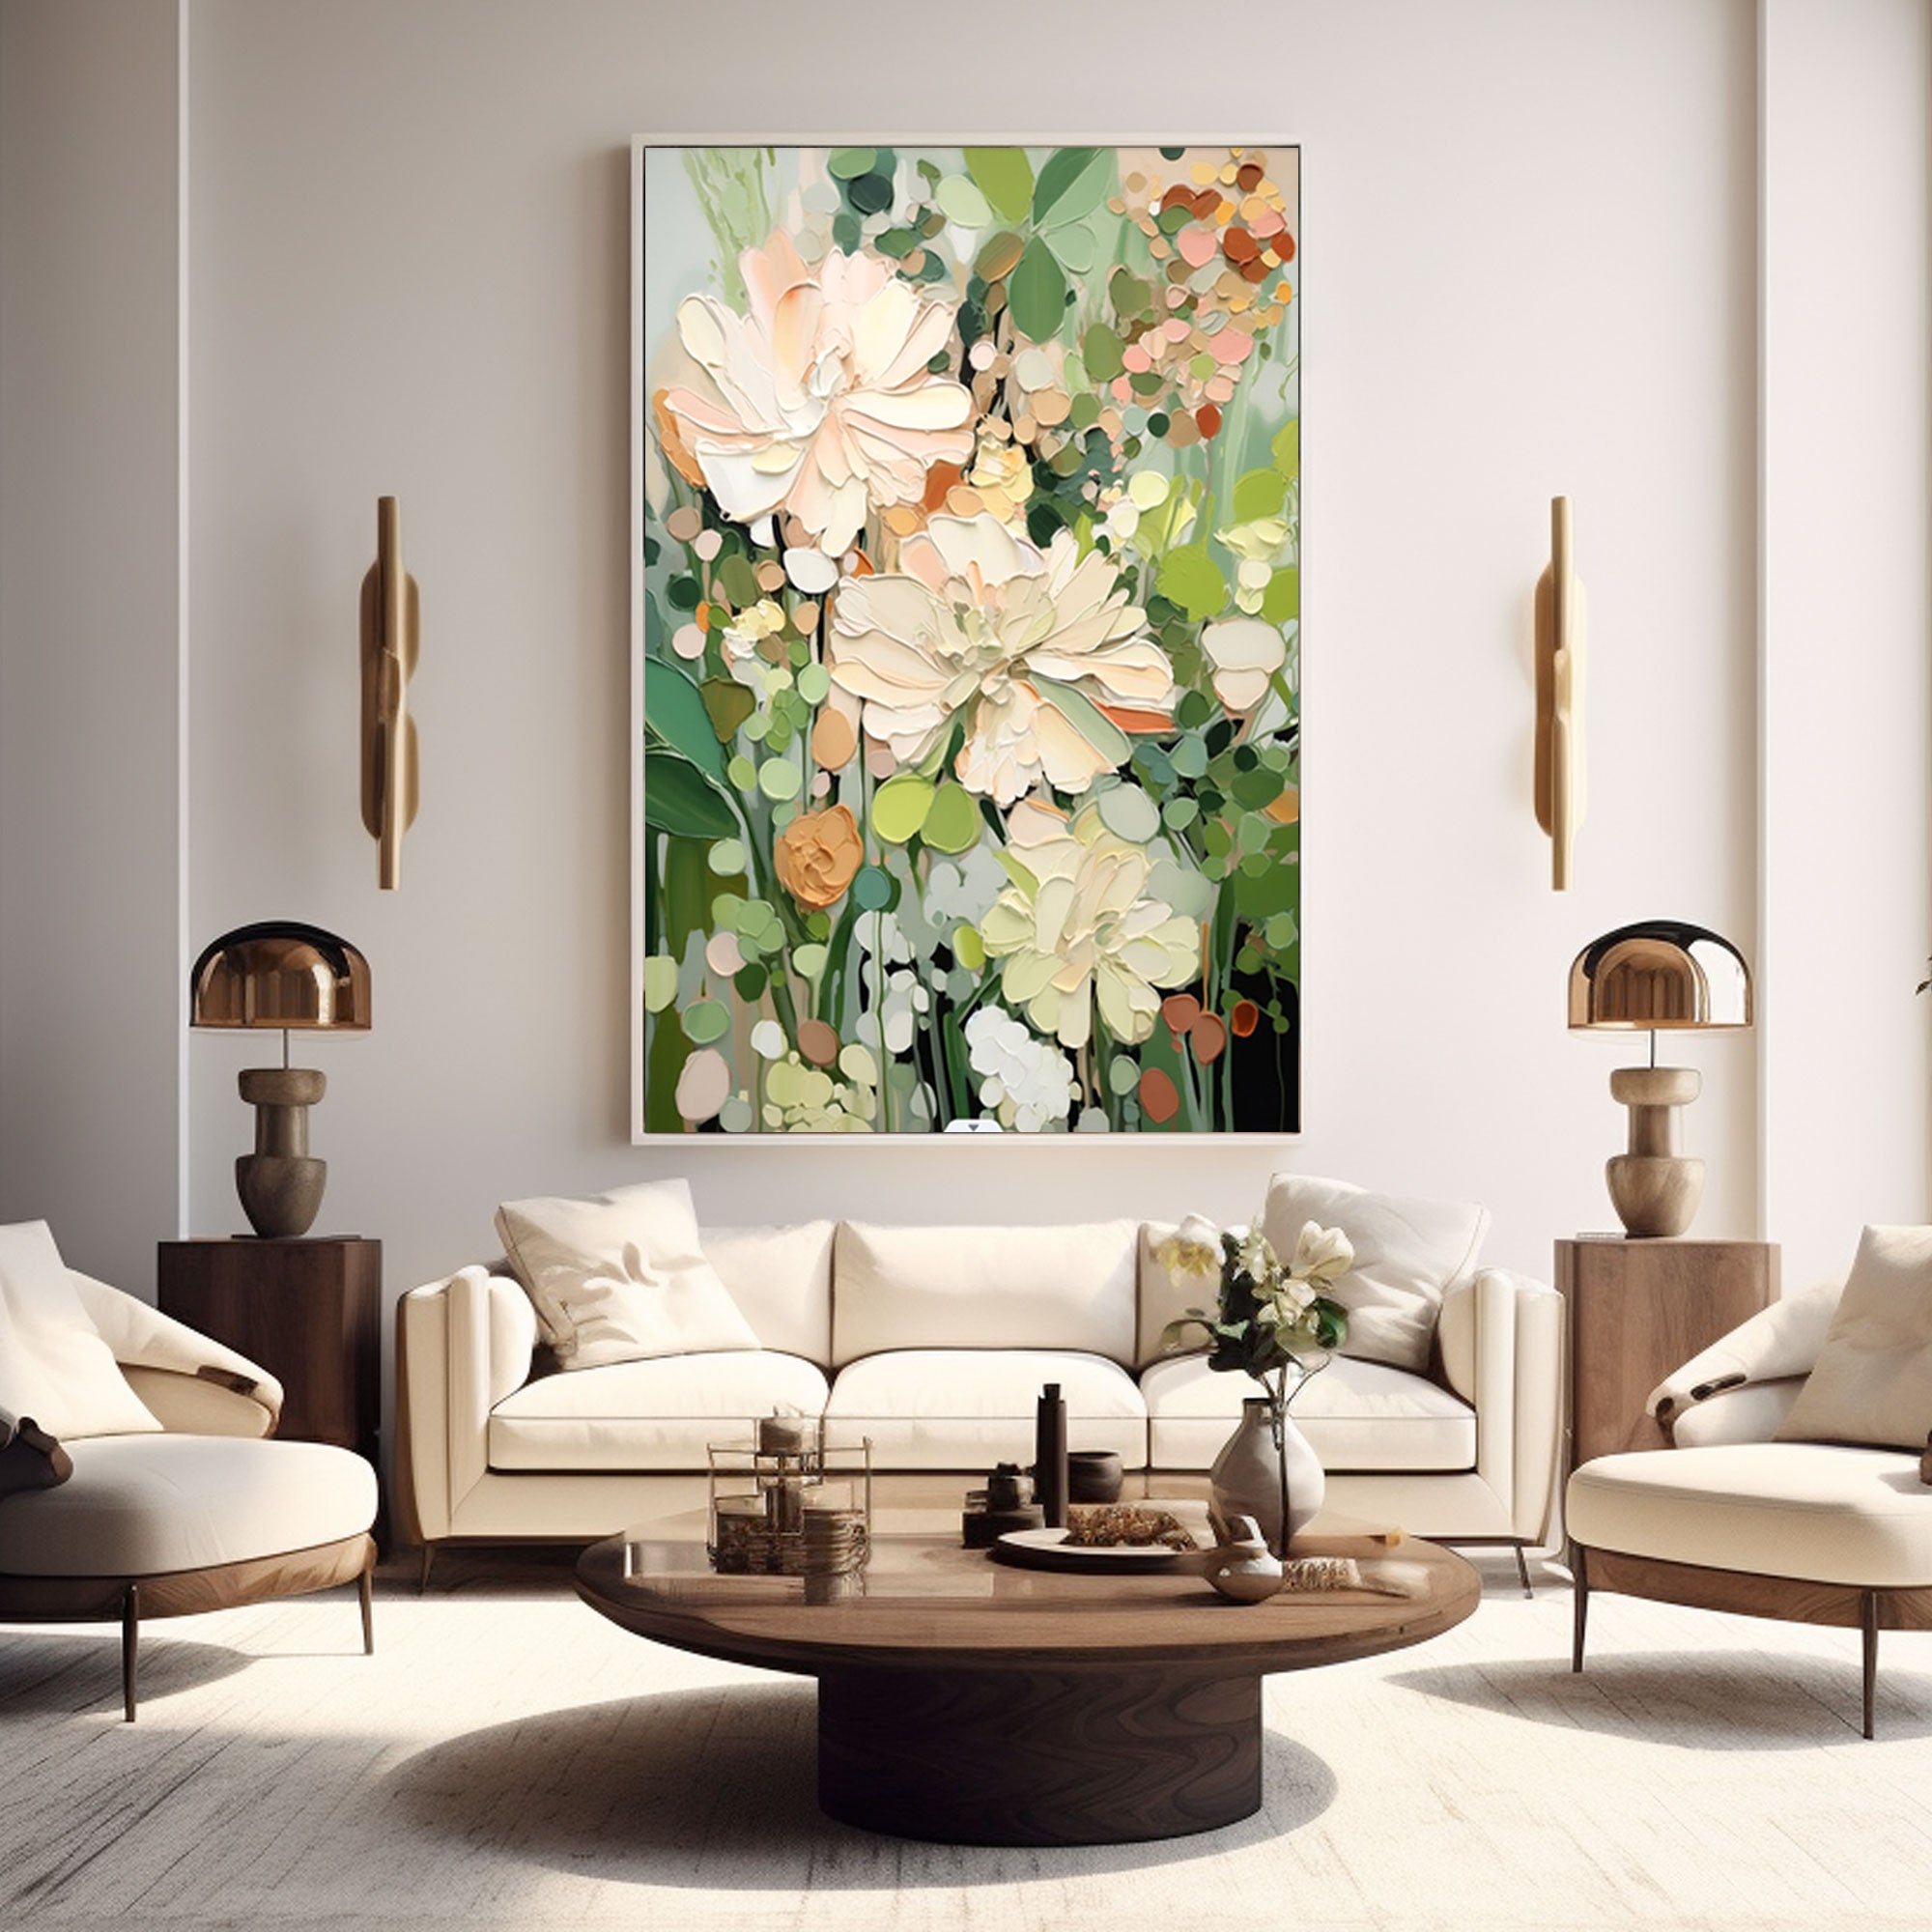 Colorful Abstract Art Painting "Blooming Serenade"